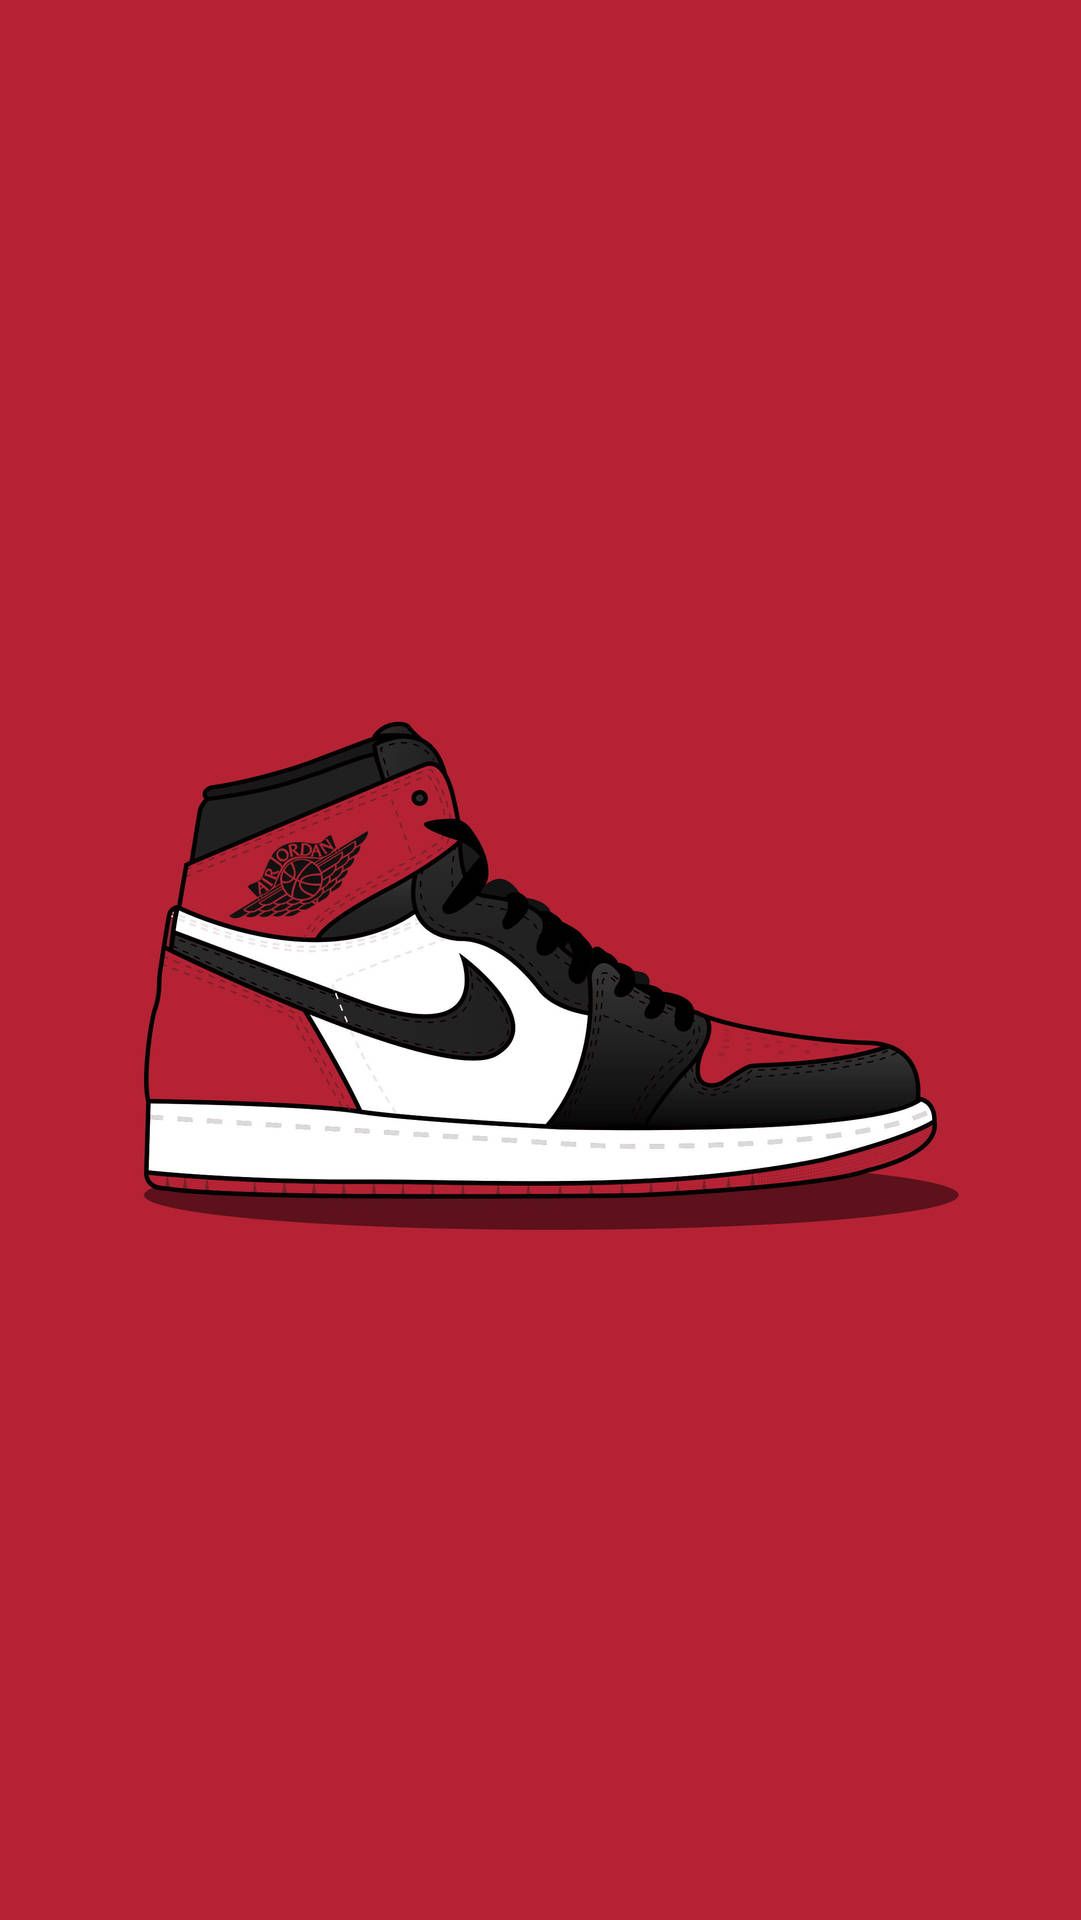  Jordan Hintergrundbild 1081x1920. Download Aesthetic Nike Jordan 1 Wallpaper